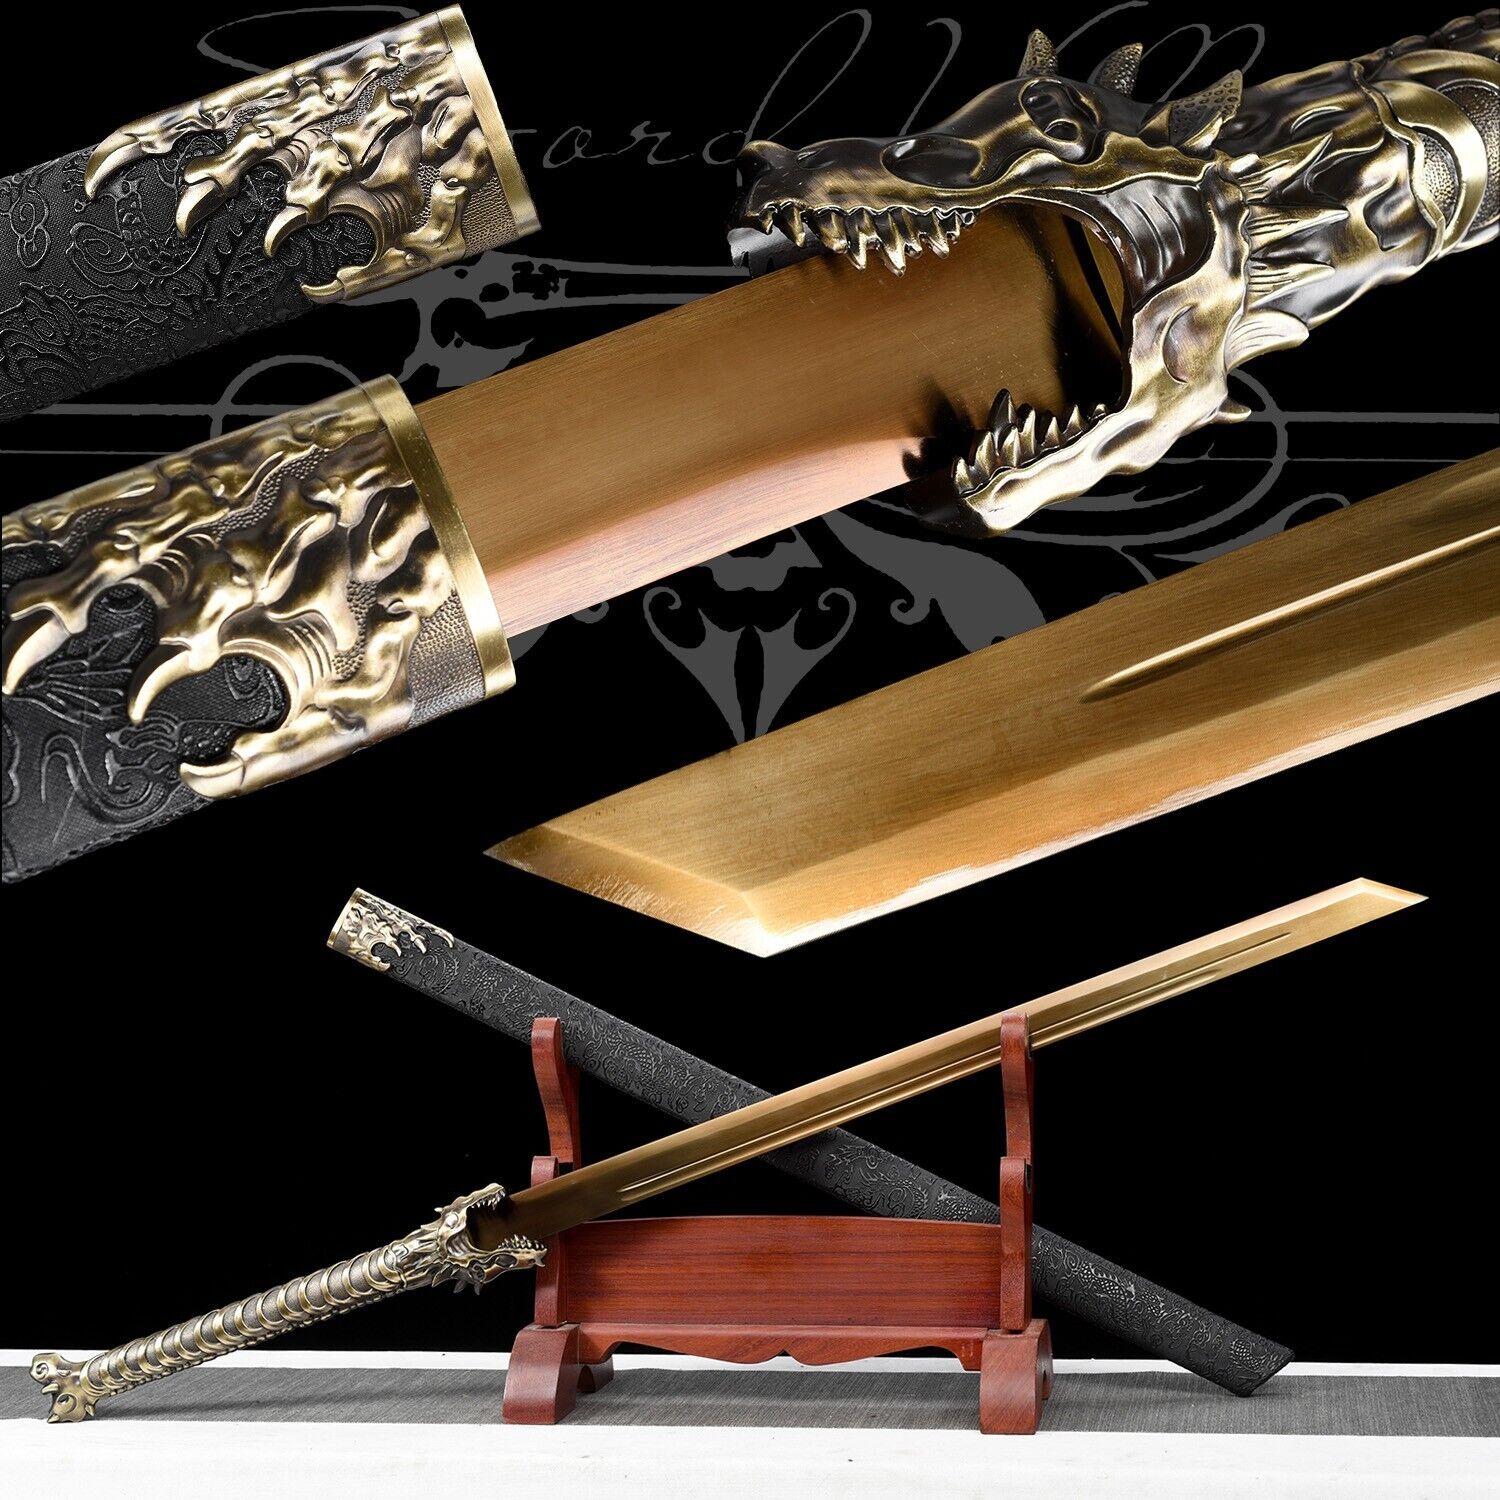 110cm Handmade Katana/Collectible Sword/High-Quality Blade/Sharp/Golden Dragon